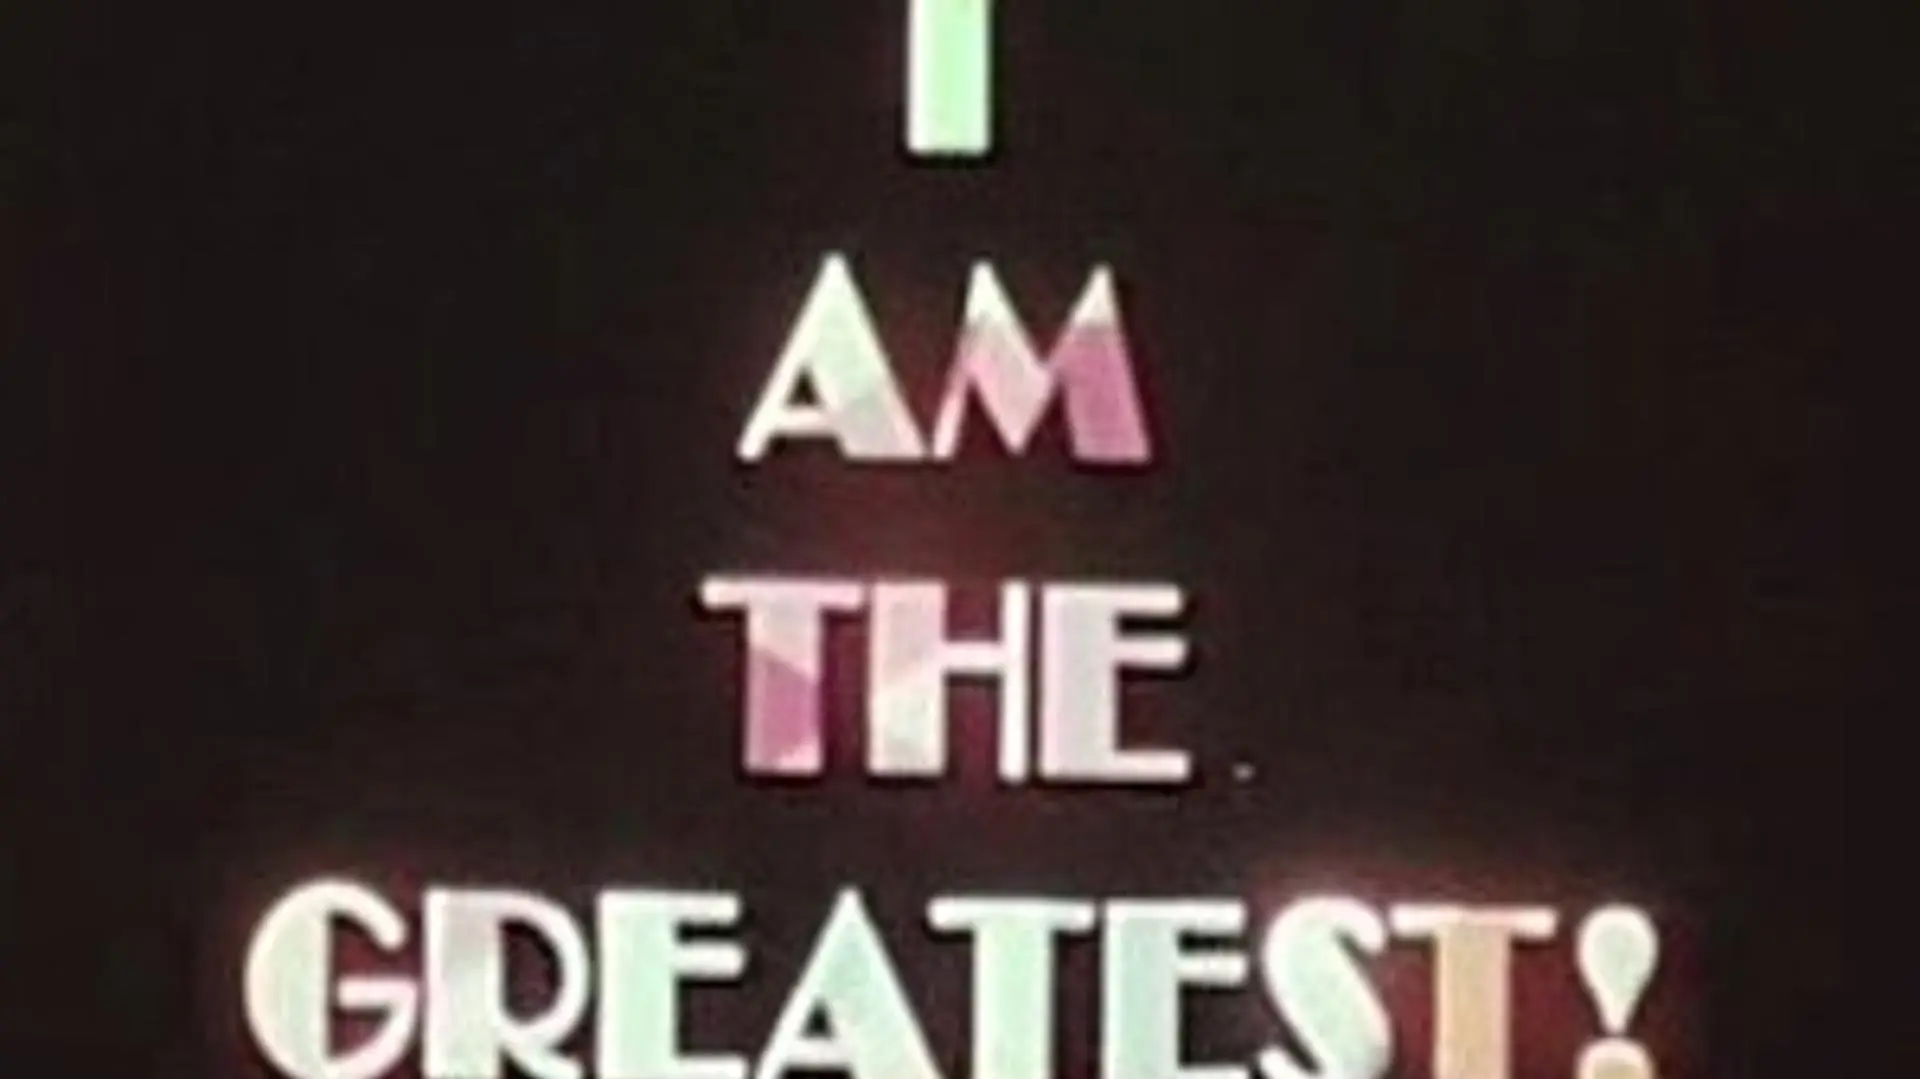 I Am the Greatest!: The Adventures of Muhammad Ali_peliplat